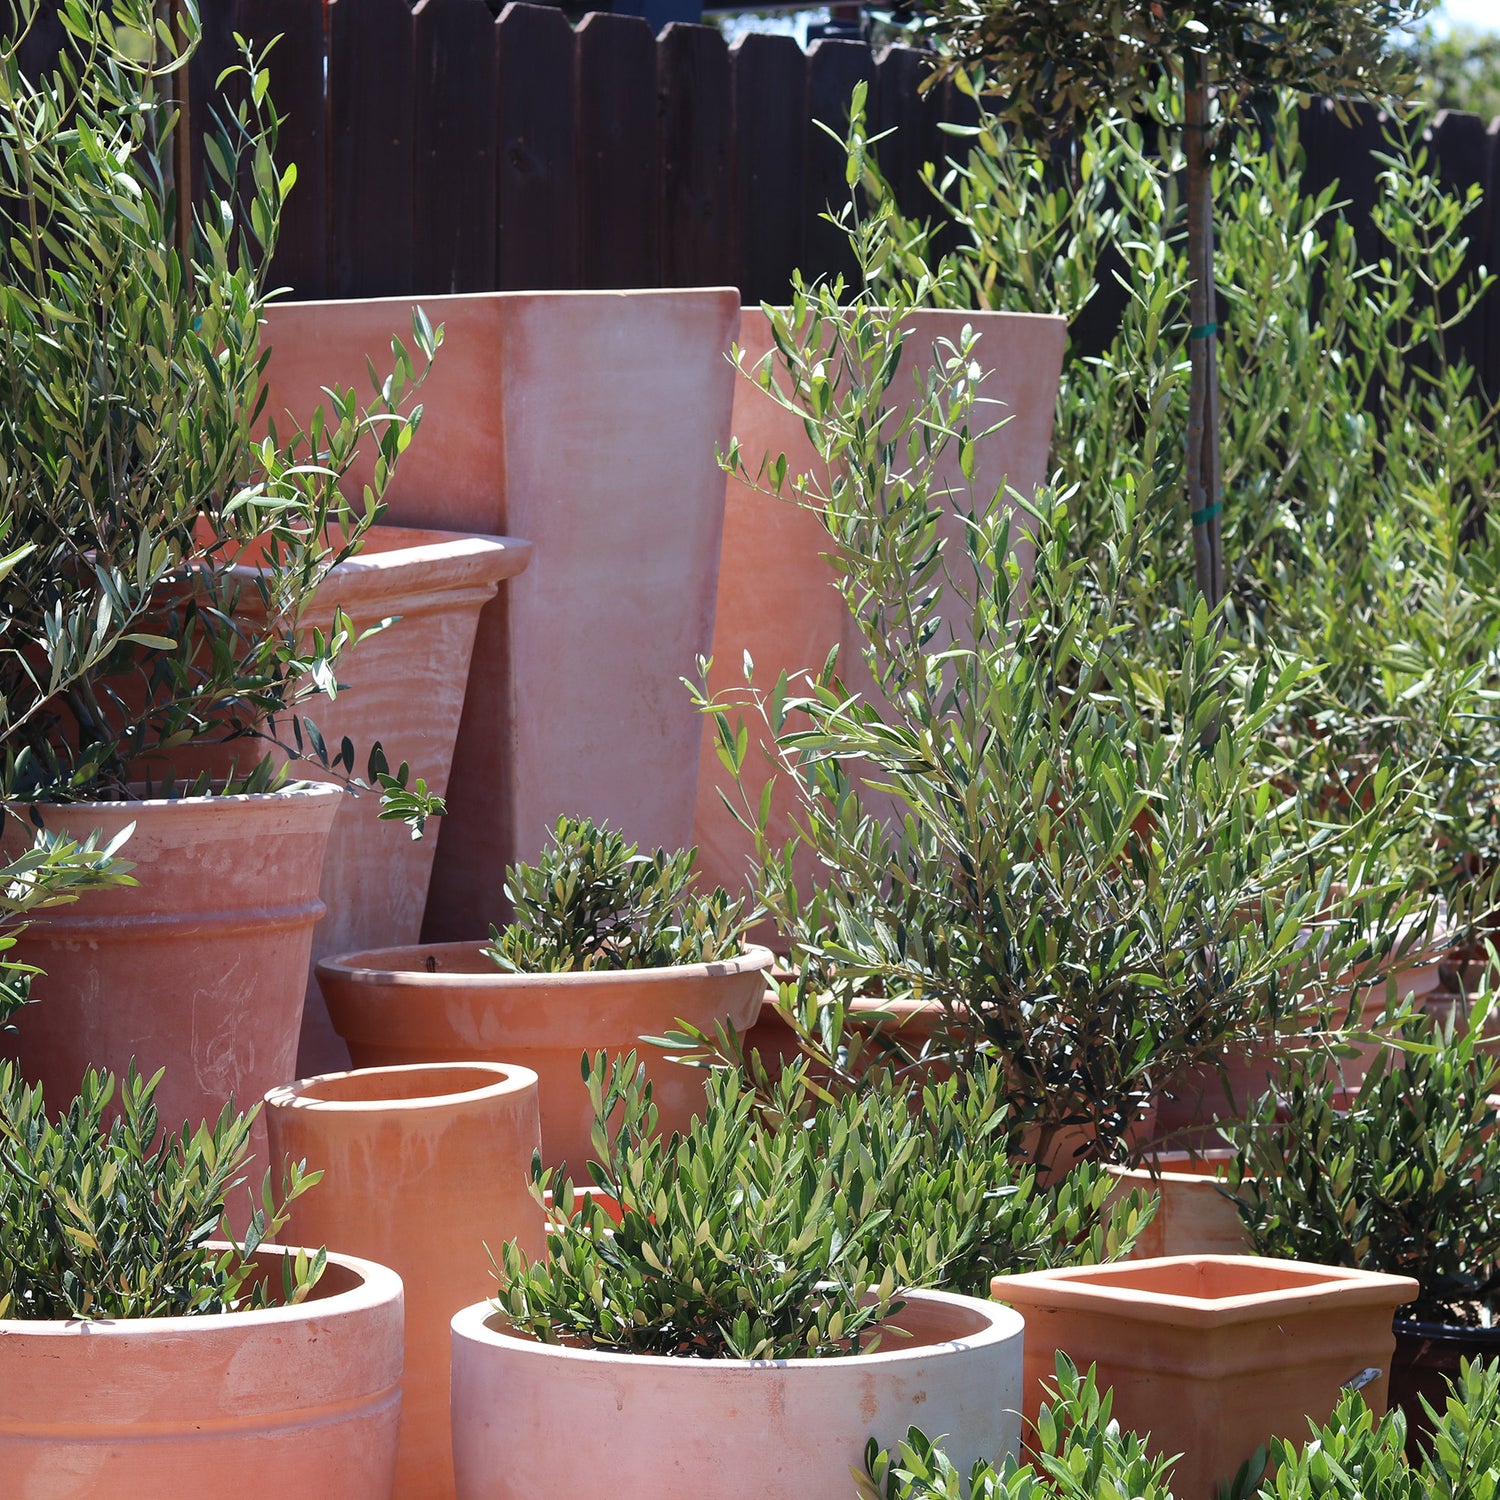 santa barbara planters 7 day nursery. offering locally made planters, pots, and plants. santa barbara olive trees.